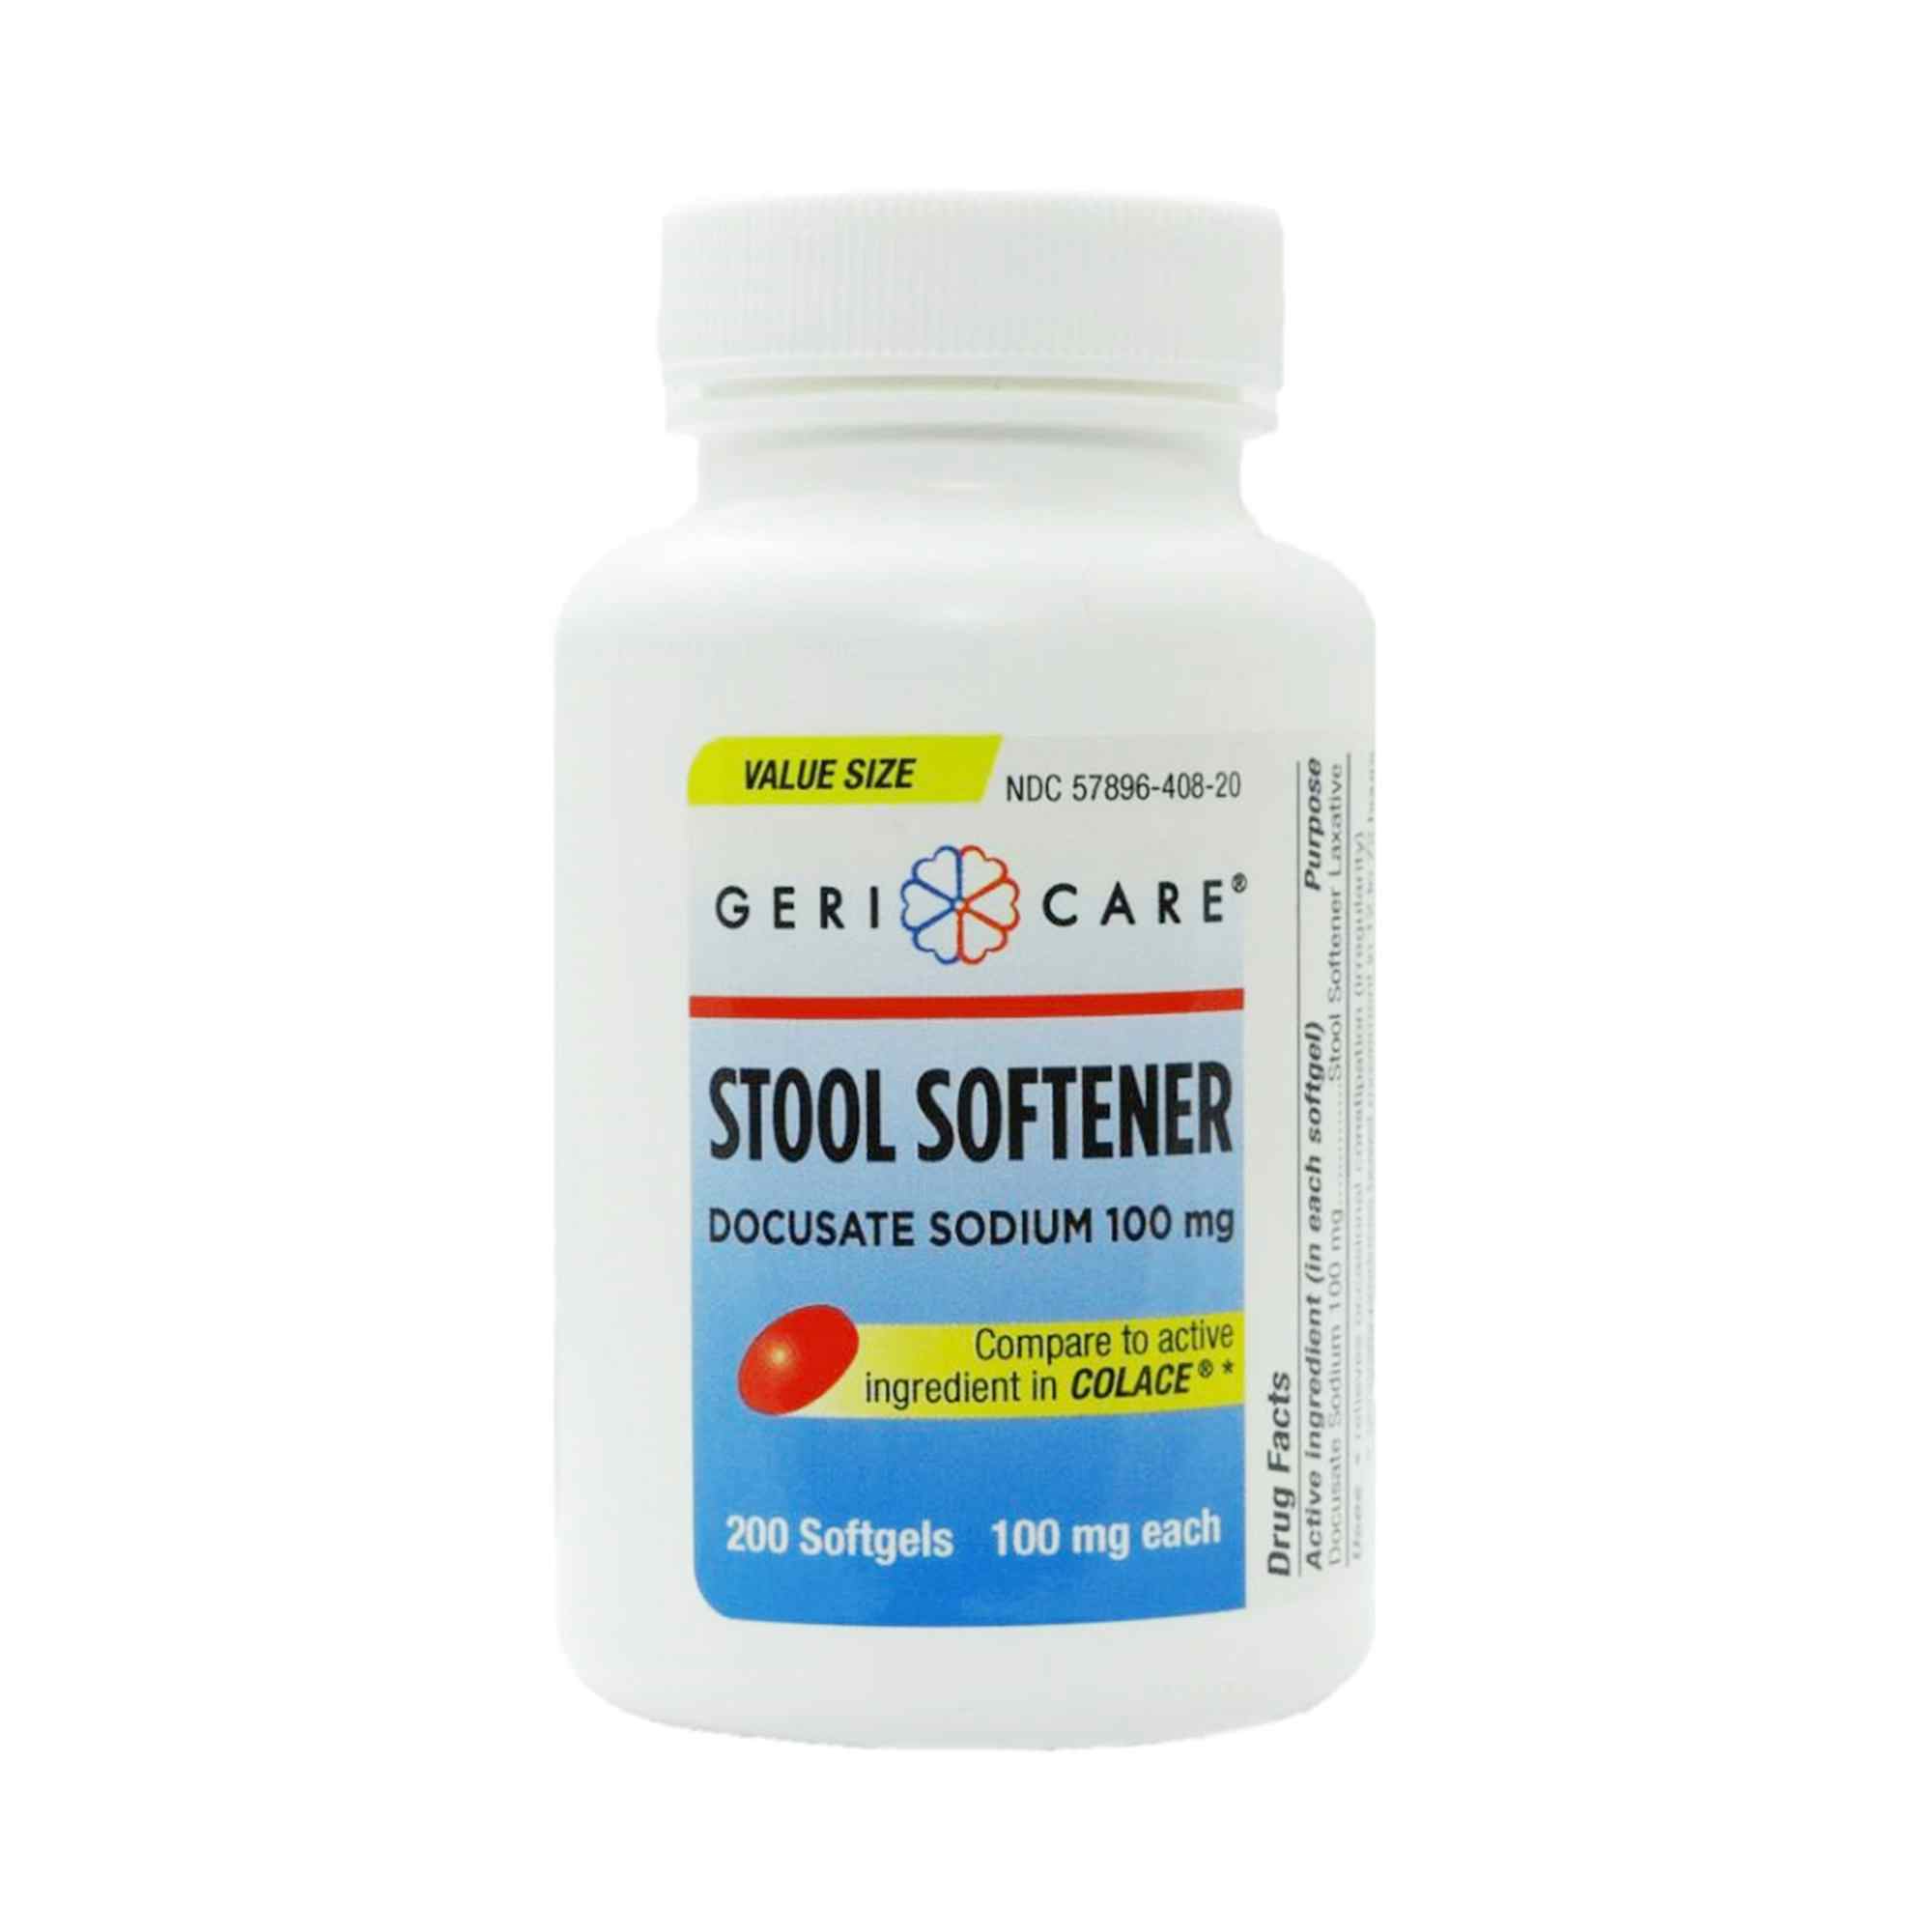 Geri-Care Stool Softener Docusate Sodium, 100 mg Strength